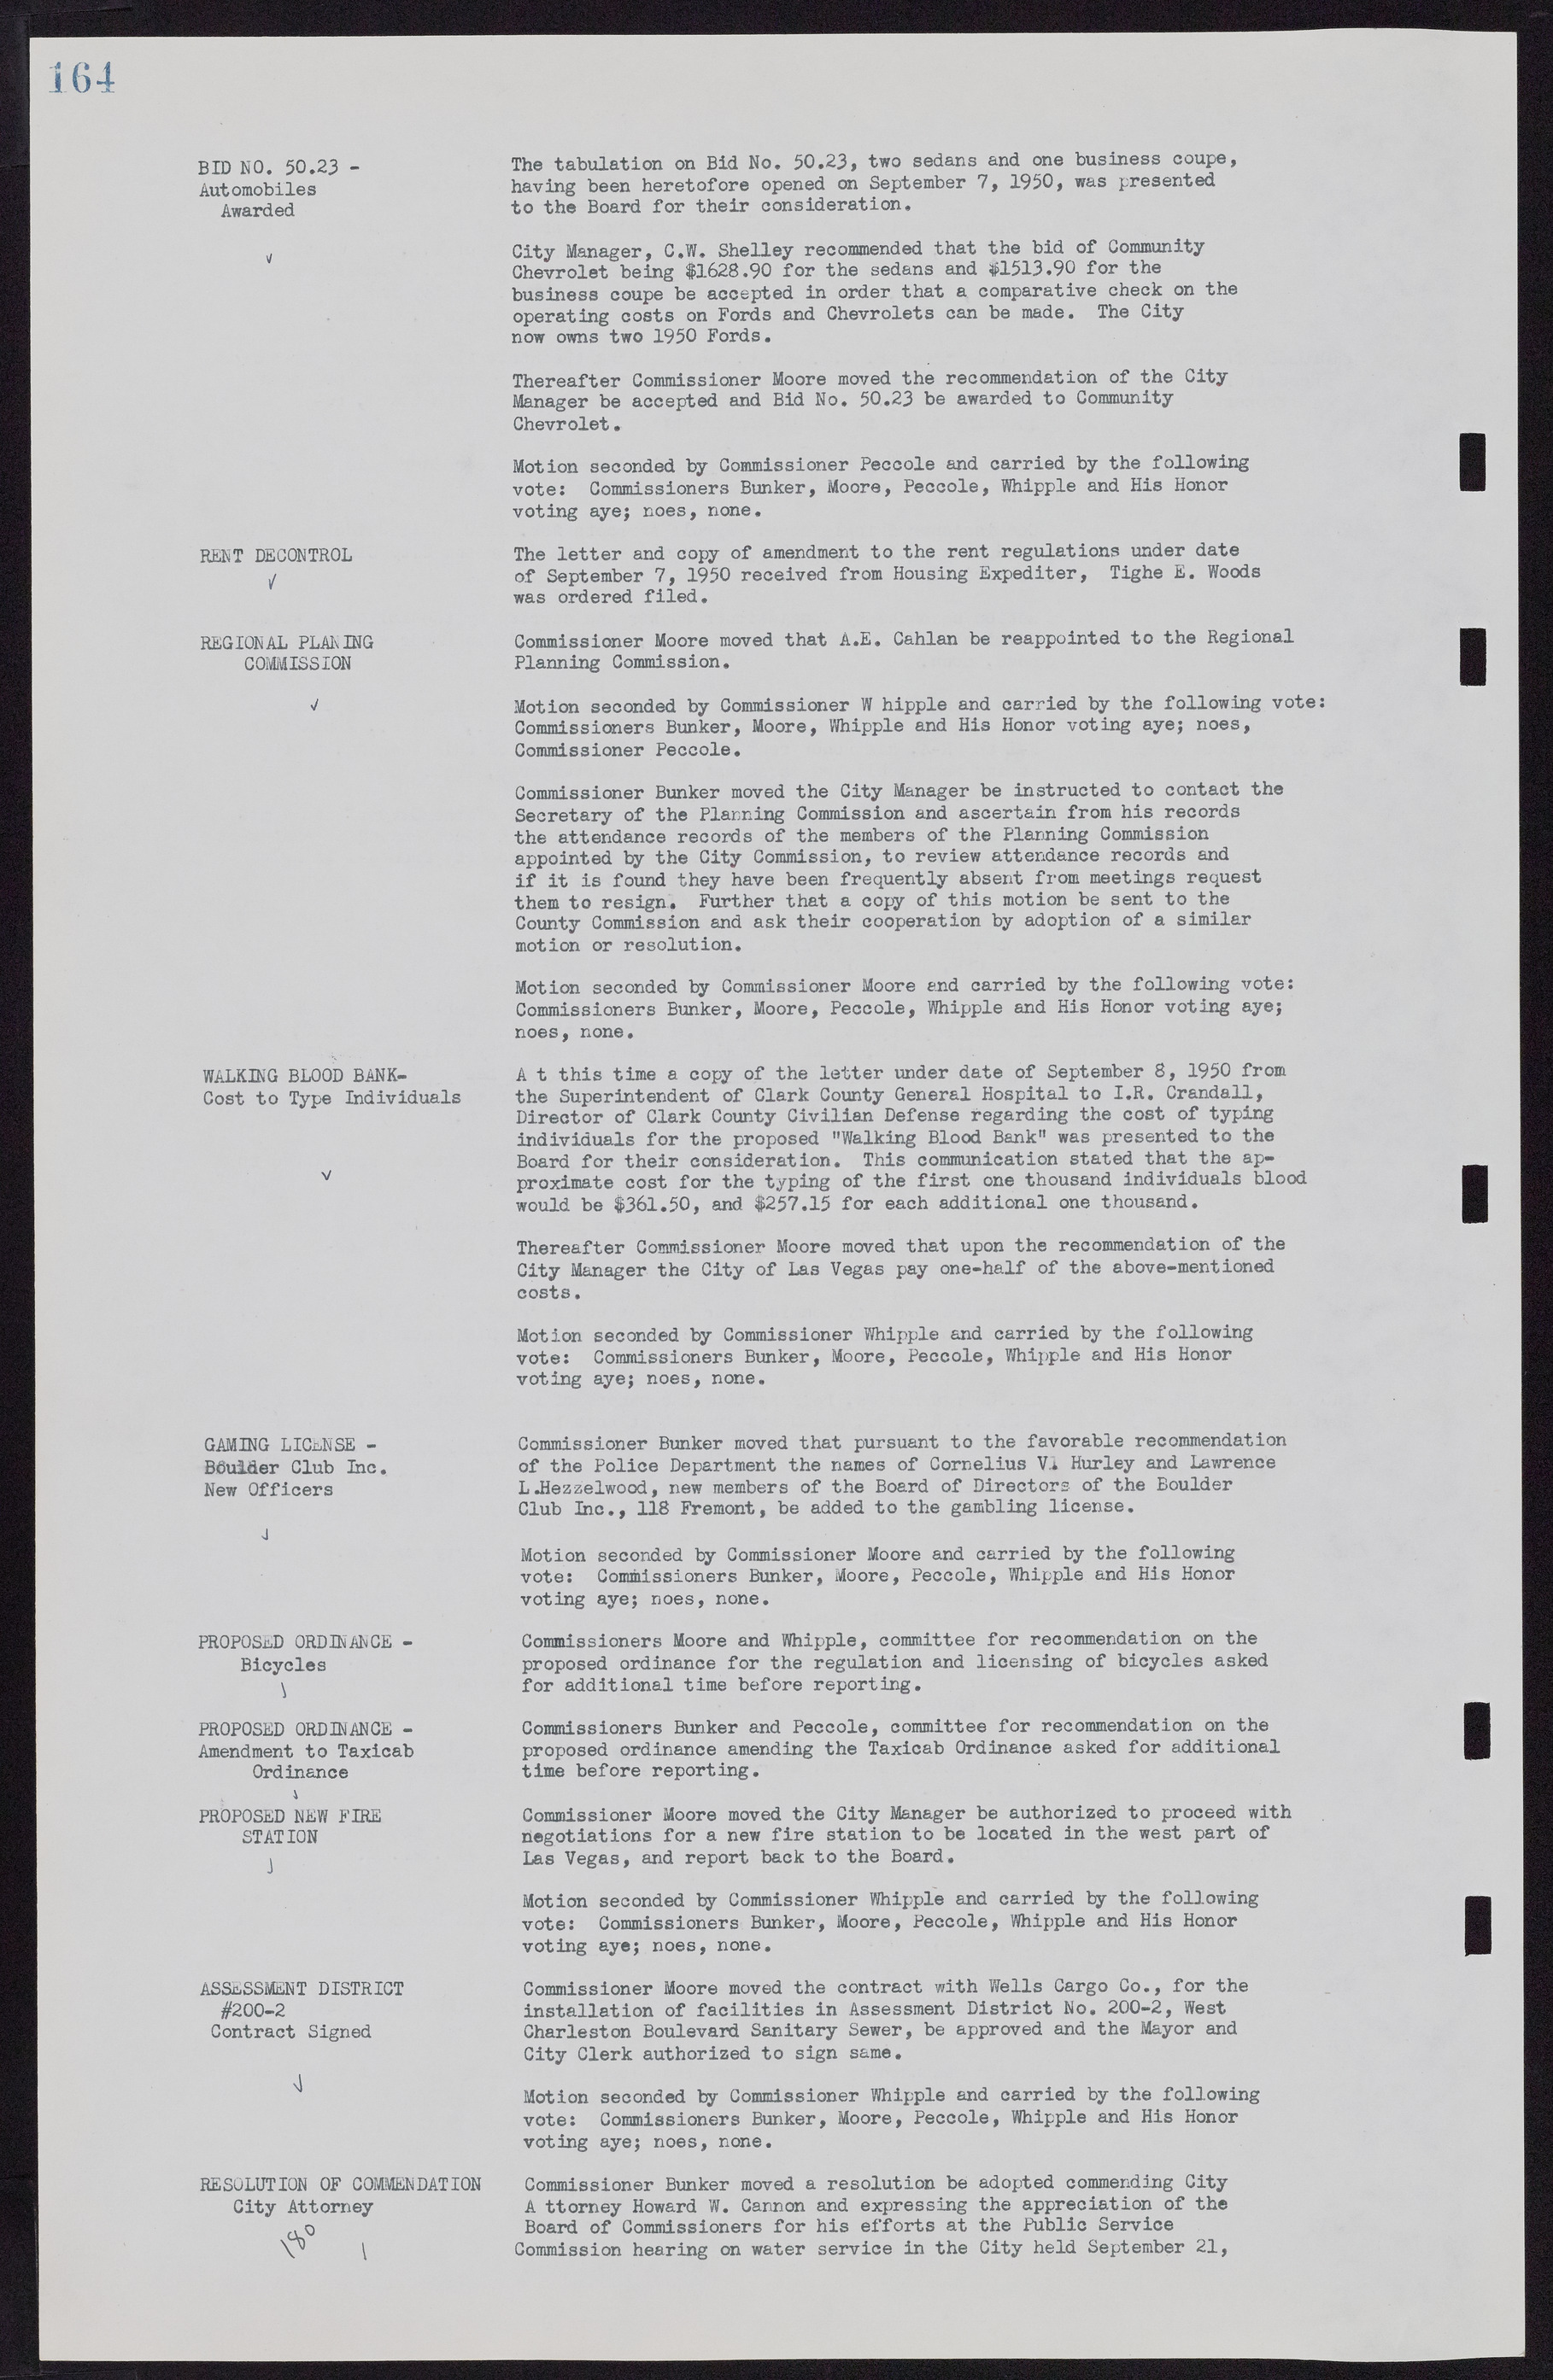 Las Vegas City Commission Minutes, November 7, 1949 to May 21, 1952, lvc000007-174